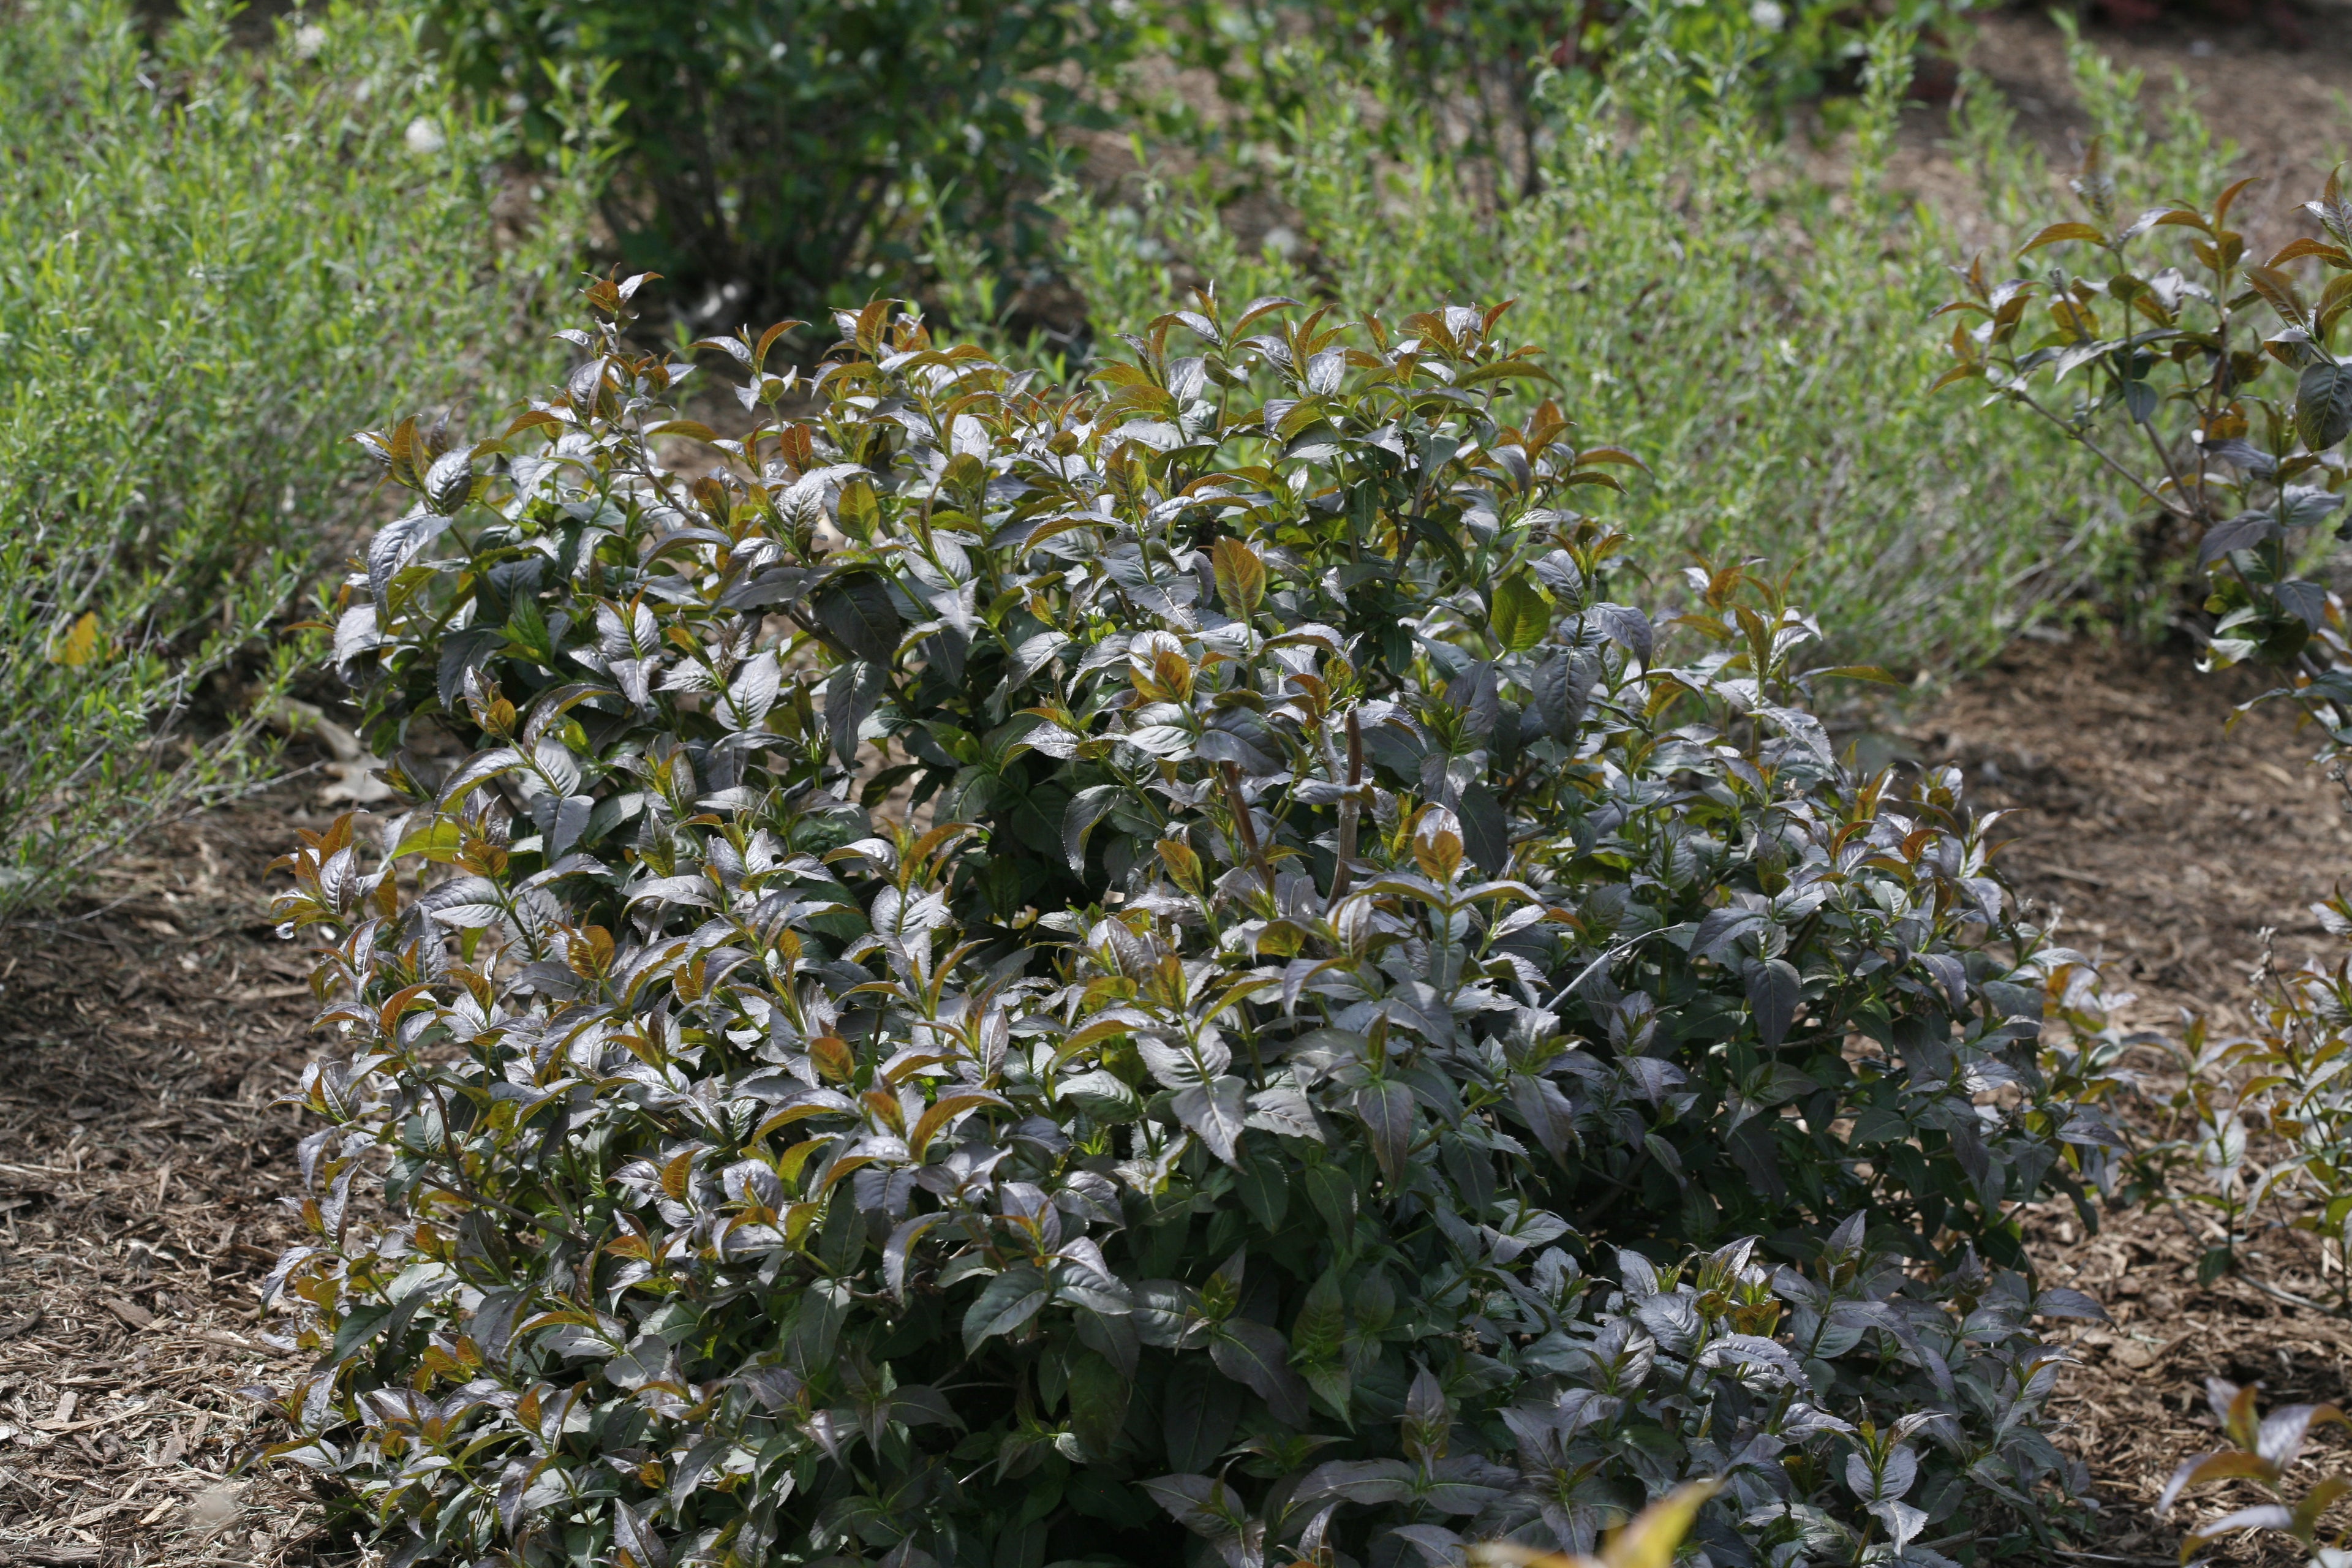 a specimen of Kodiak Black diervilla in a landscape.